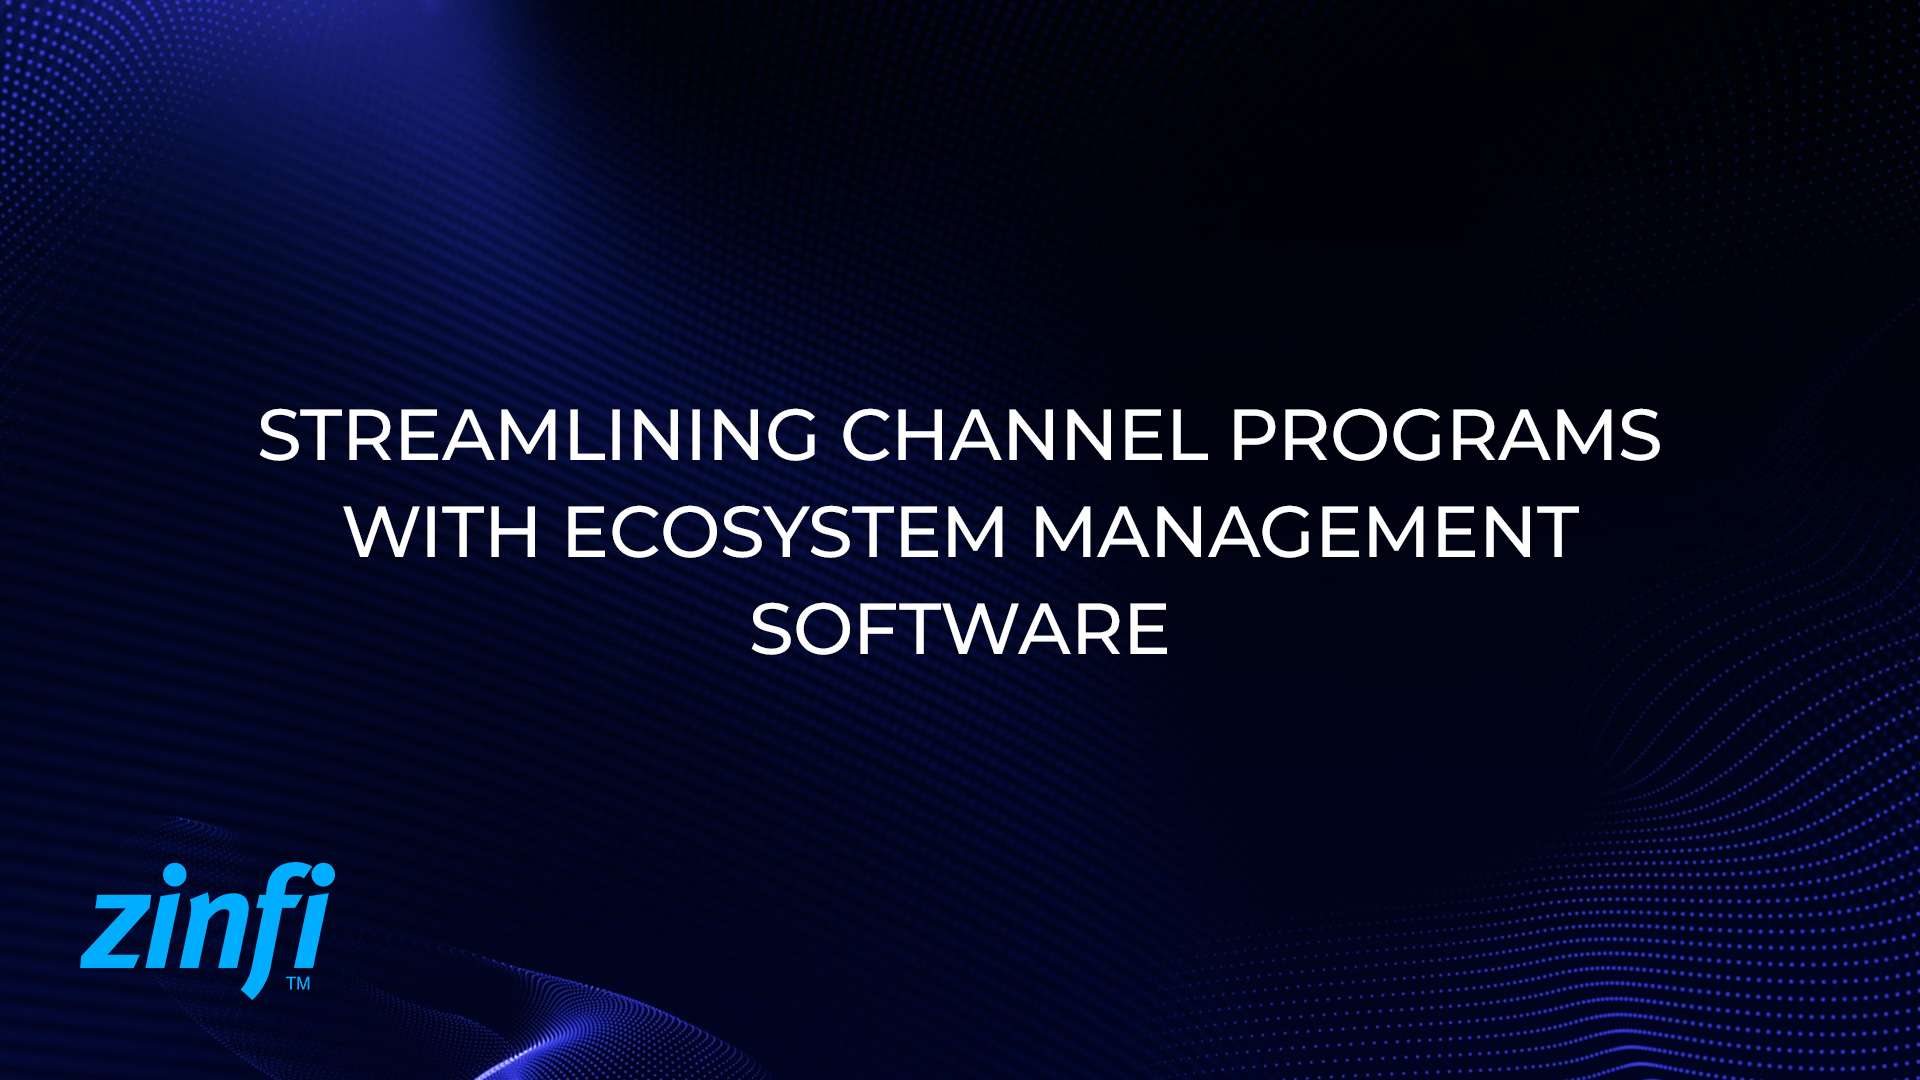 Benefits of Partner Ecosystem Management Software